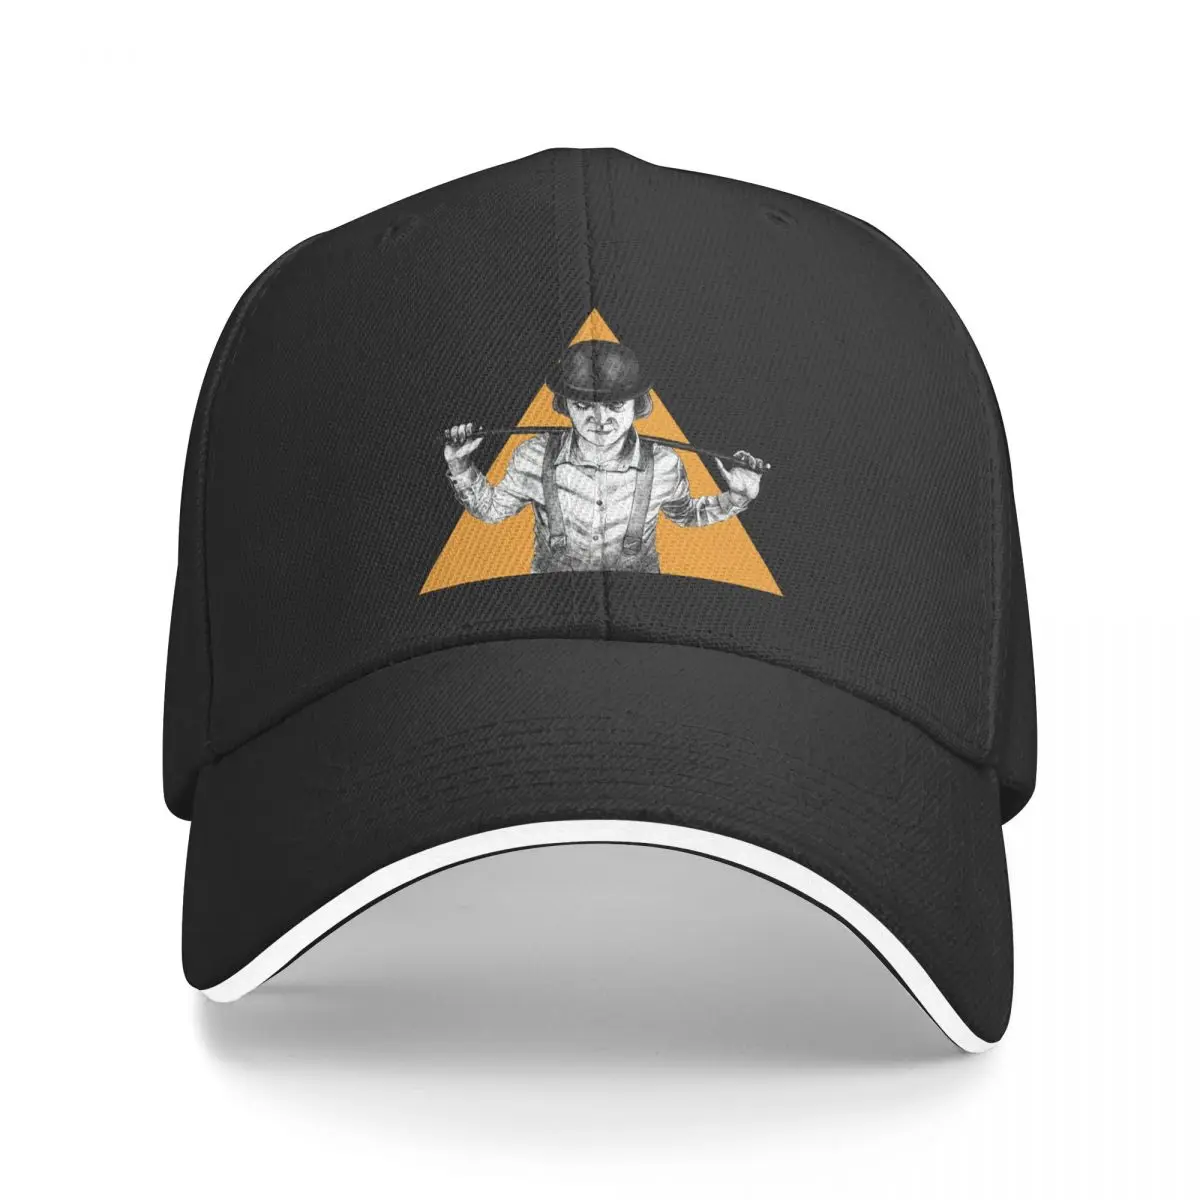 Clockwork Orange Trucker Hat mesh hat snapback hat black 